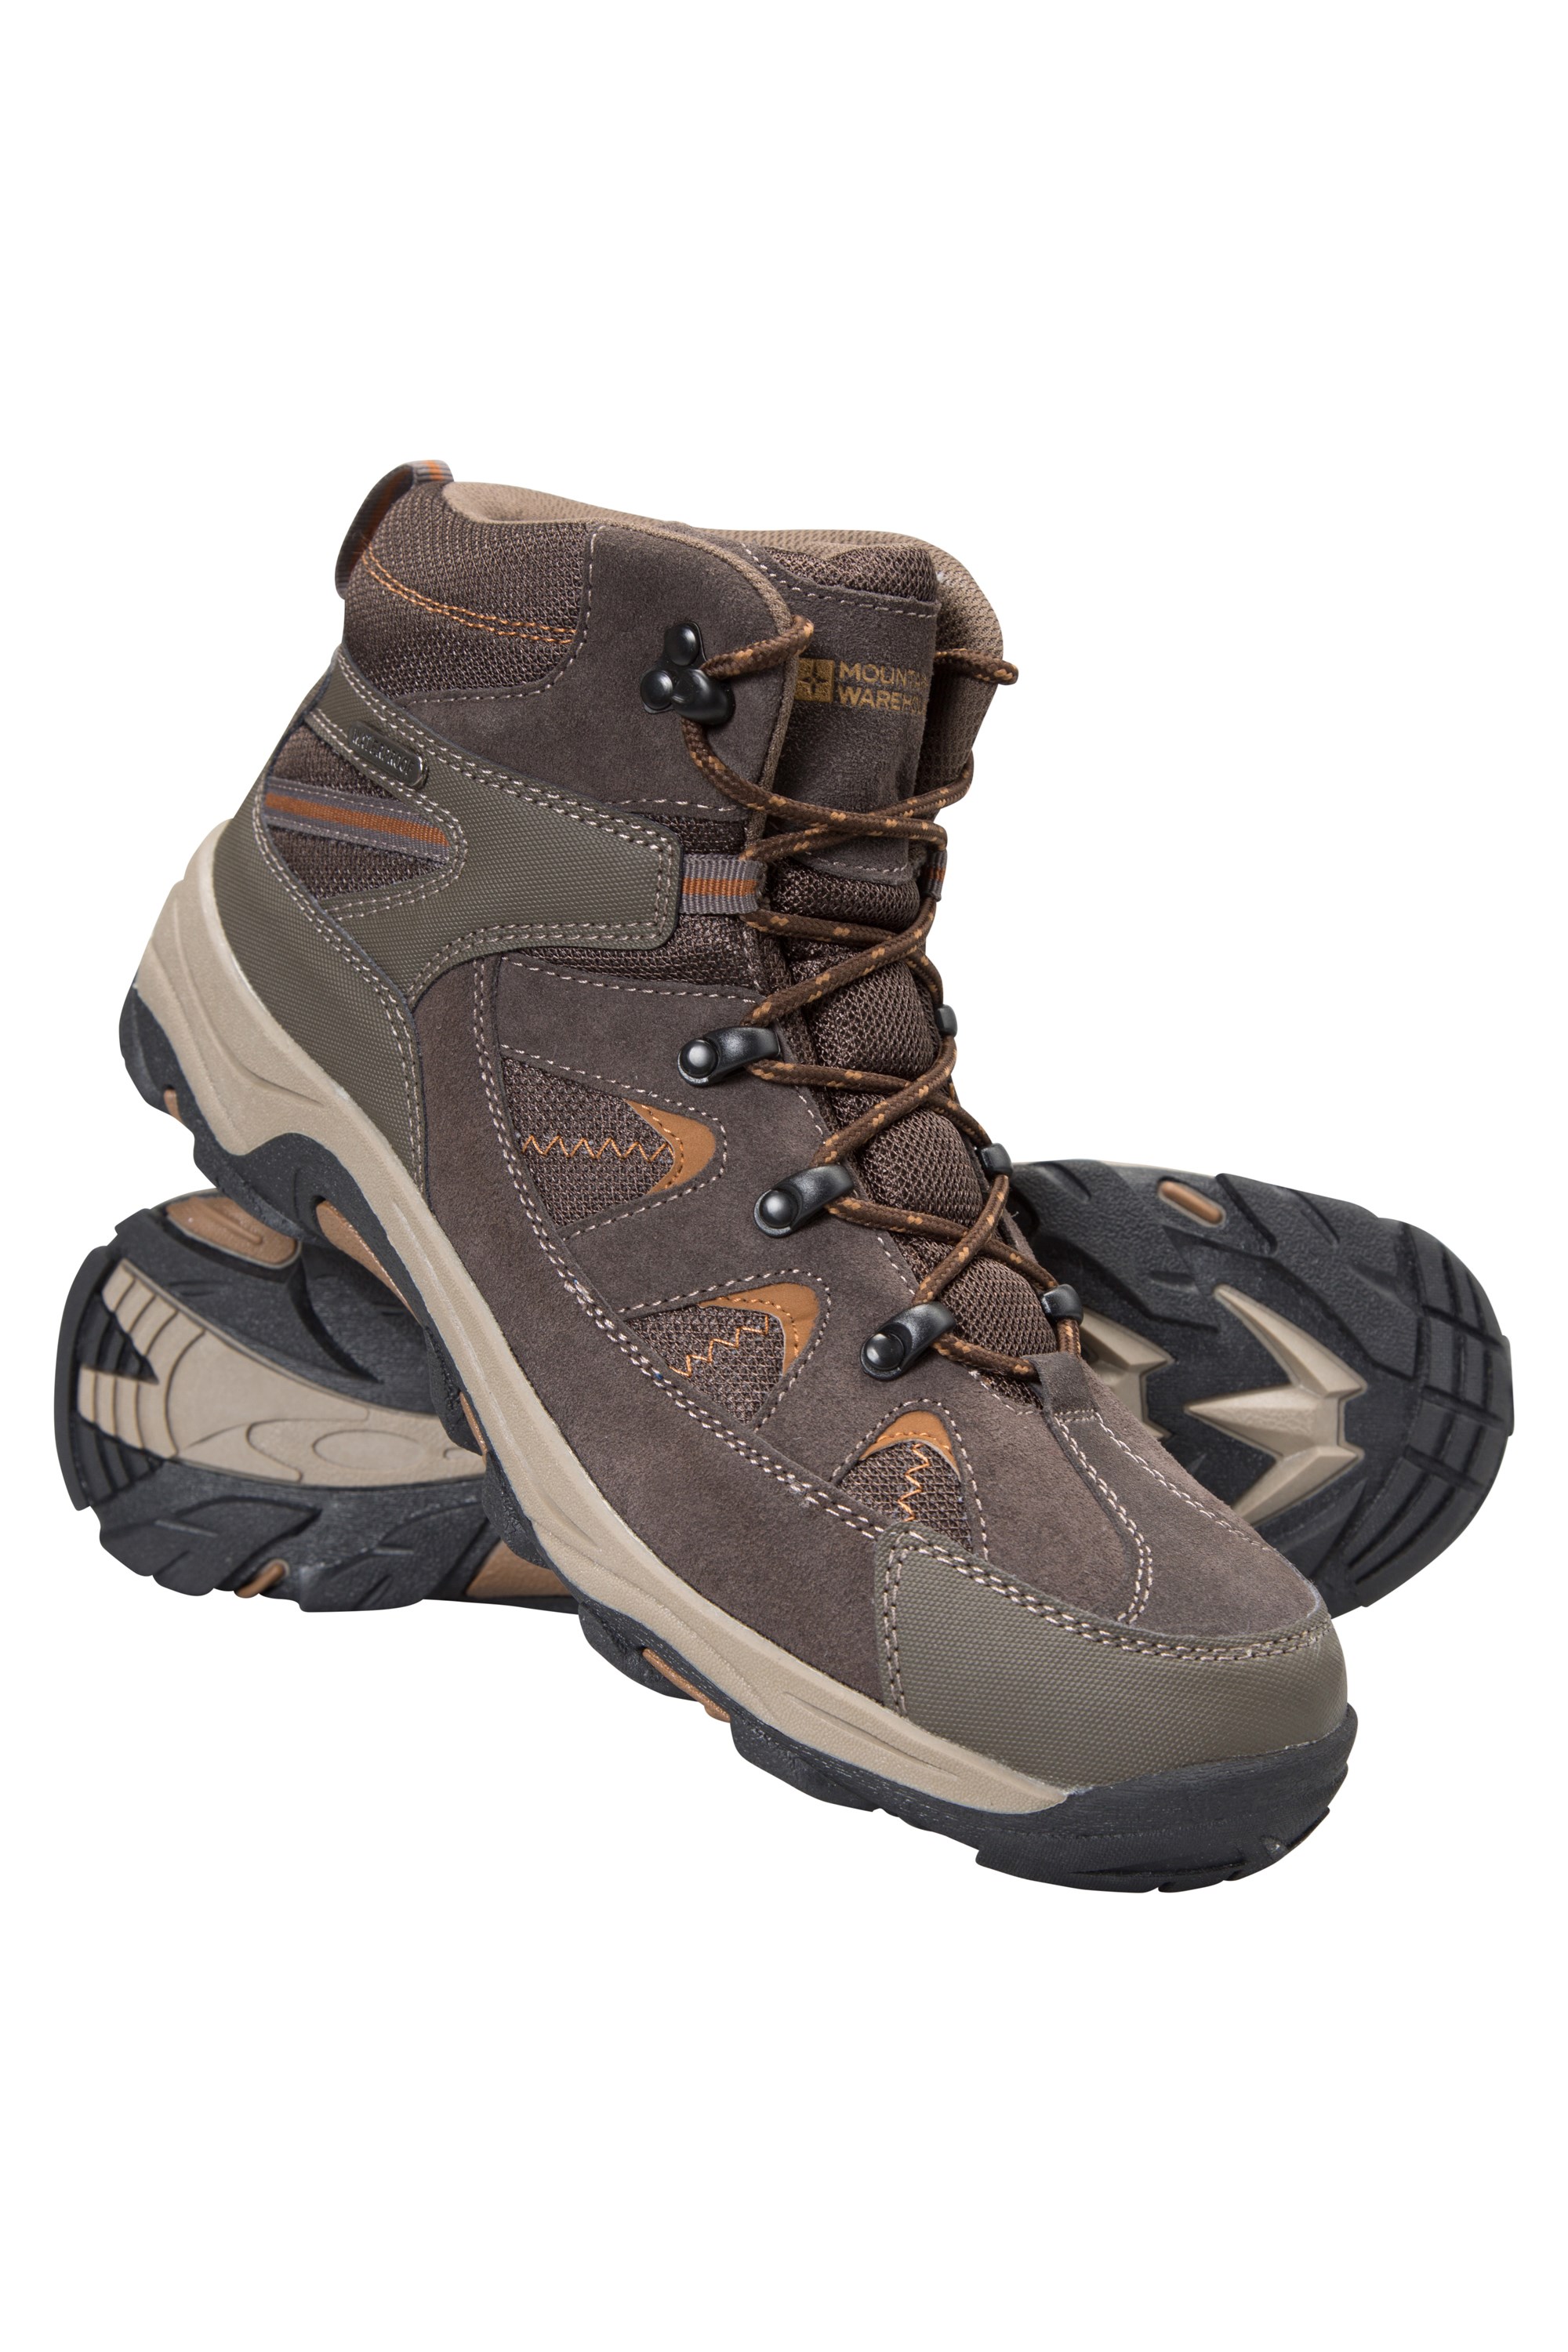 mountain warehouse walking boots mens